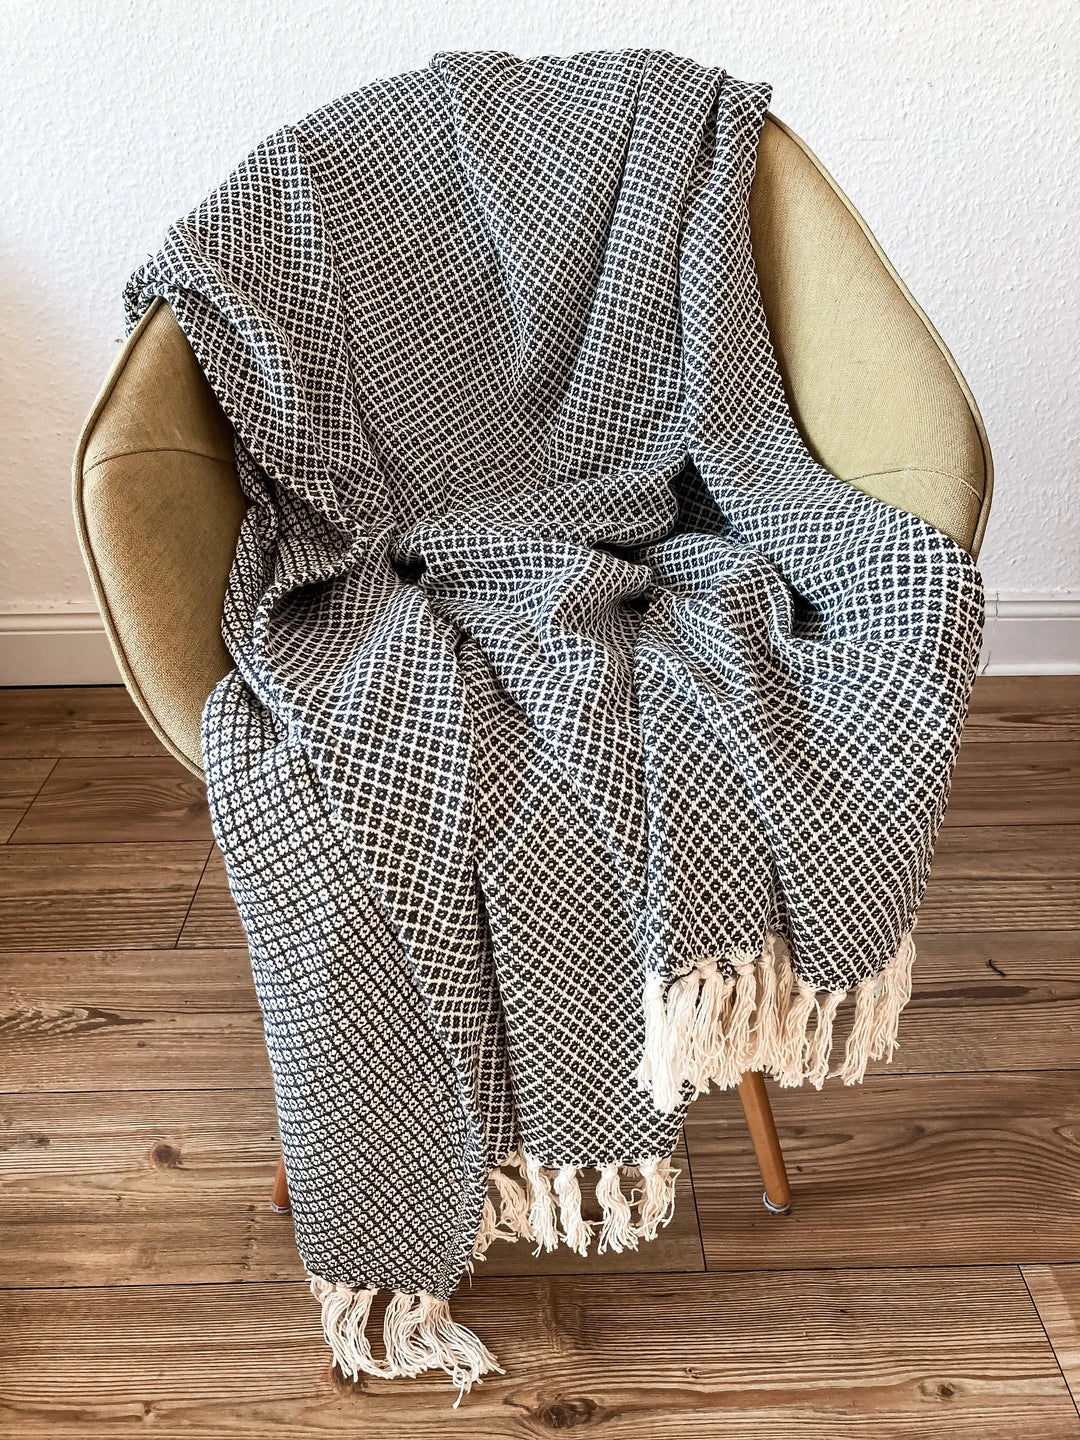 Decke aus Baumwolle Boho Style Grau-Weiß über Stuhl